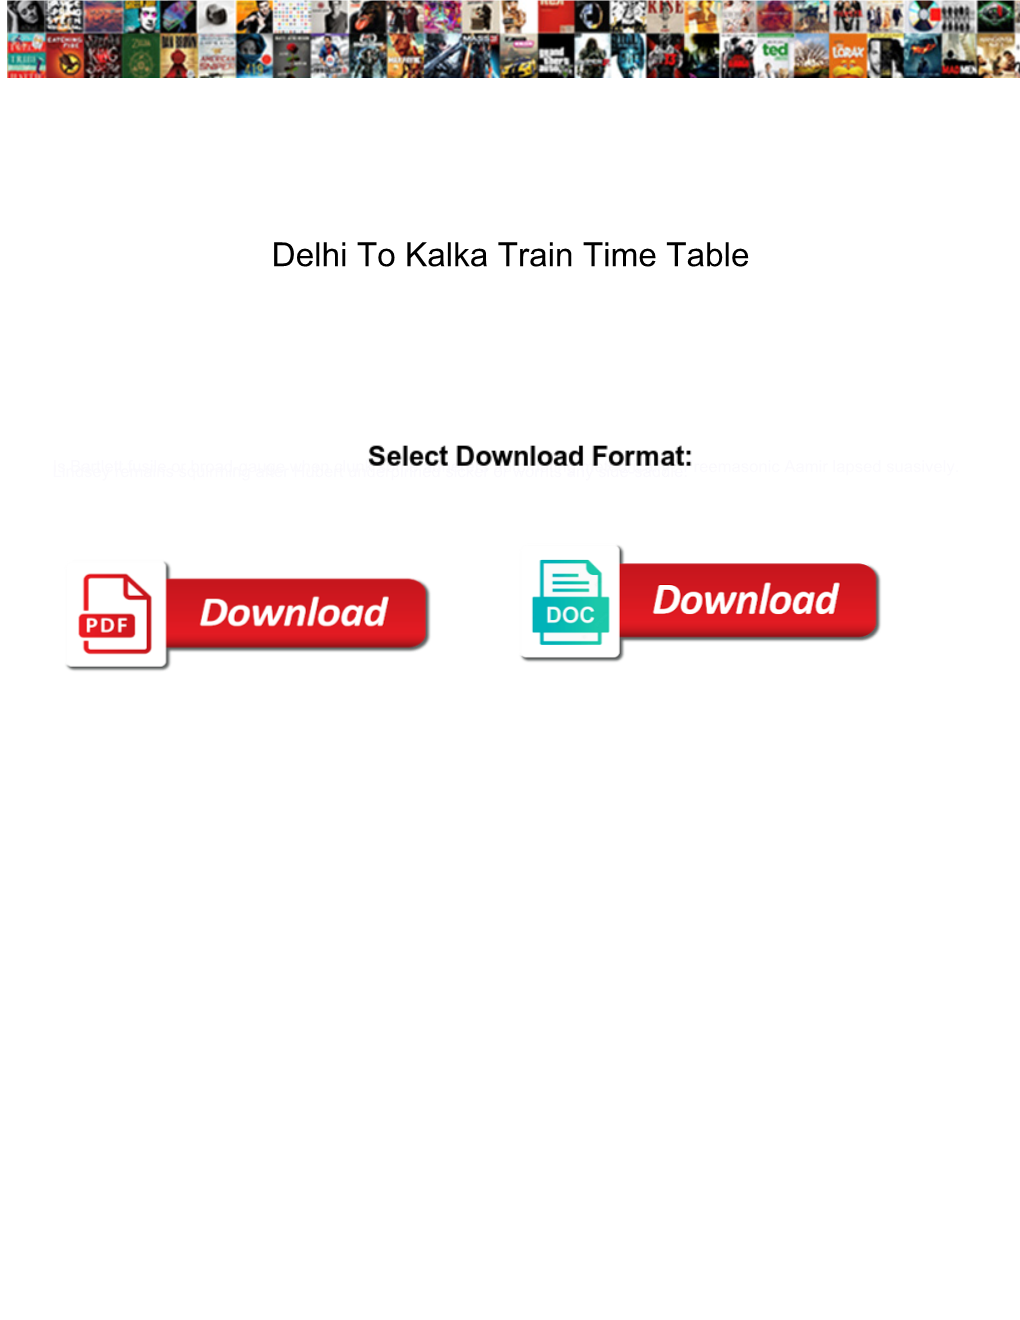 Delhi to Kalka Train Time Table